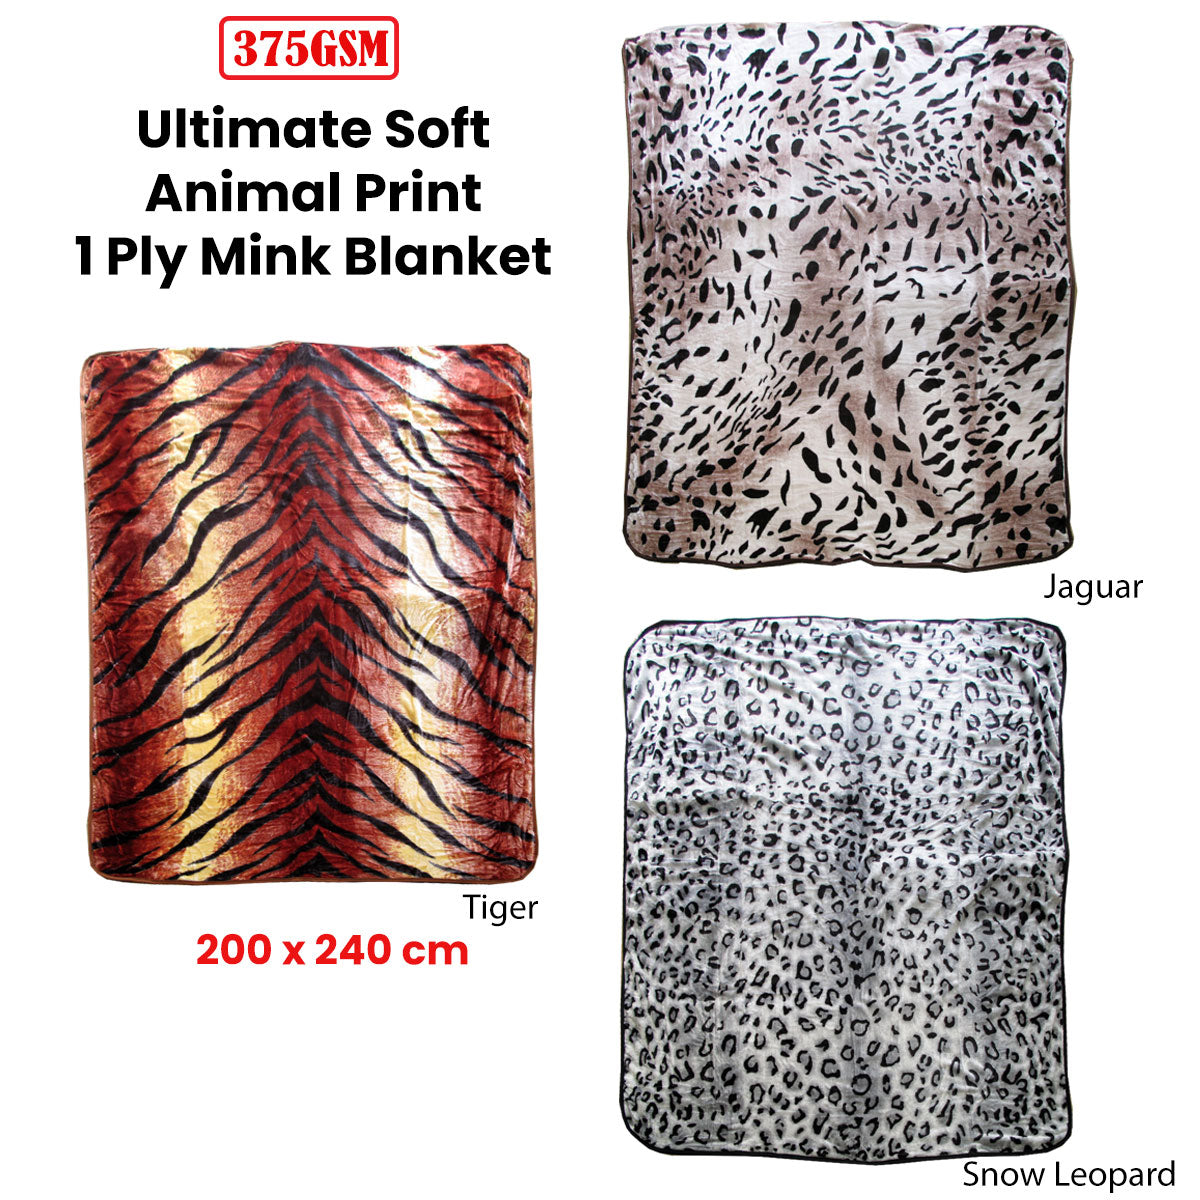 375gsm 1 Ply Animal Print Faux Mink Blanket Queen 200x240 cm Jaguar